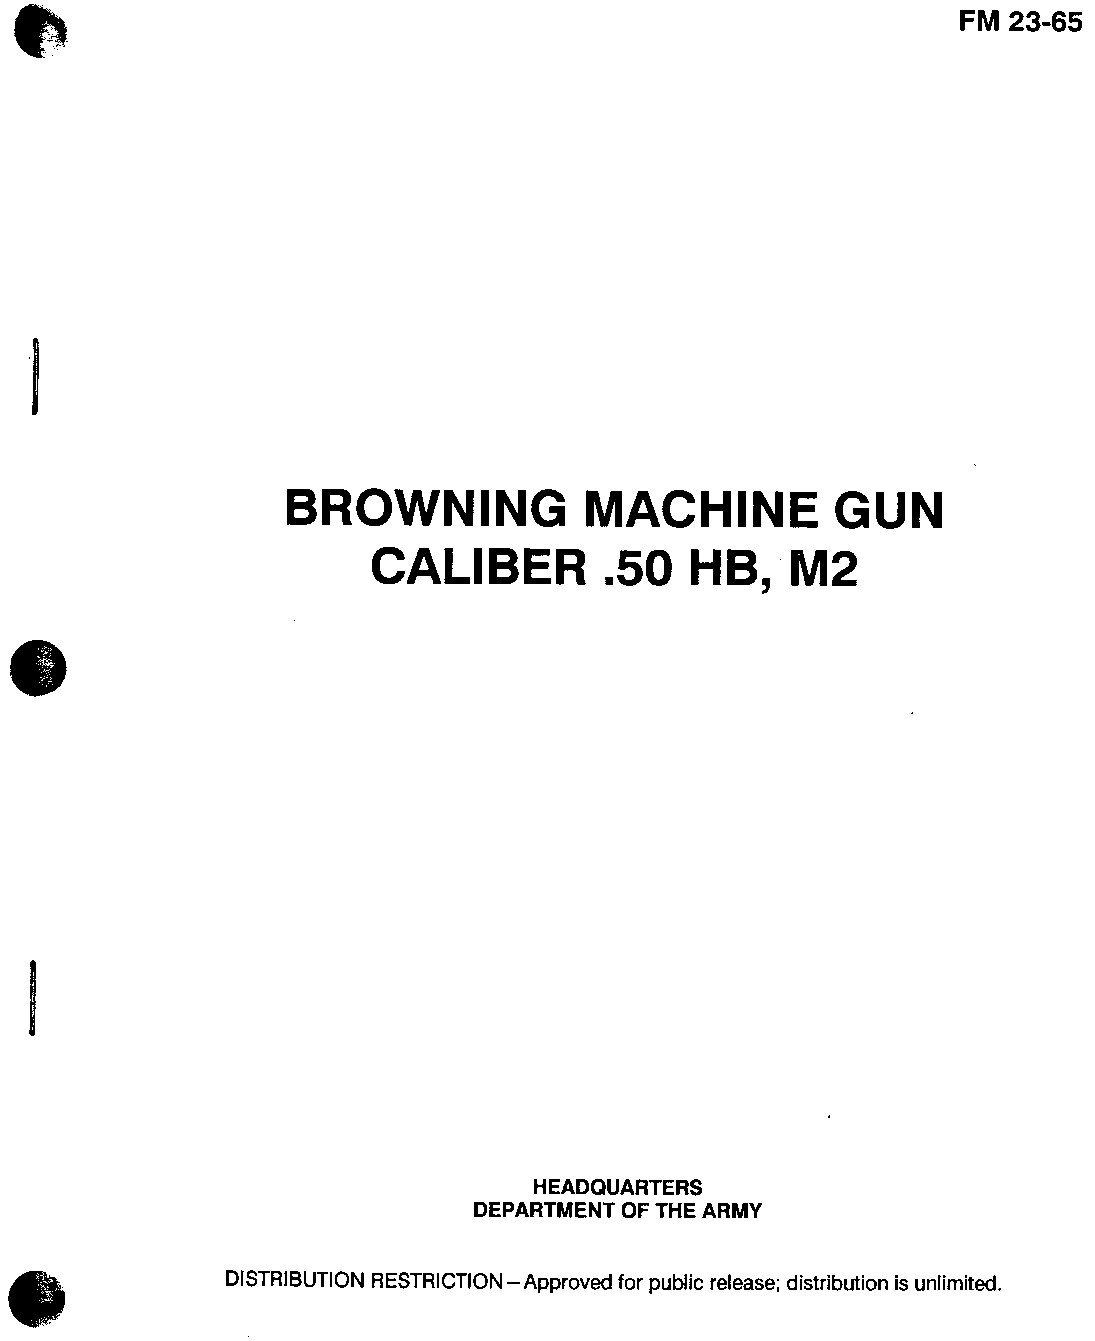 FM 23-65 Browning Machine Gun Caliber .50 HB, M2